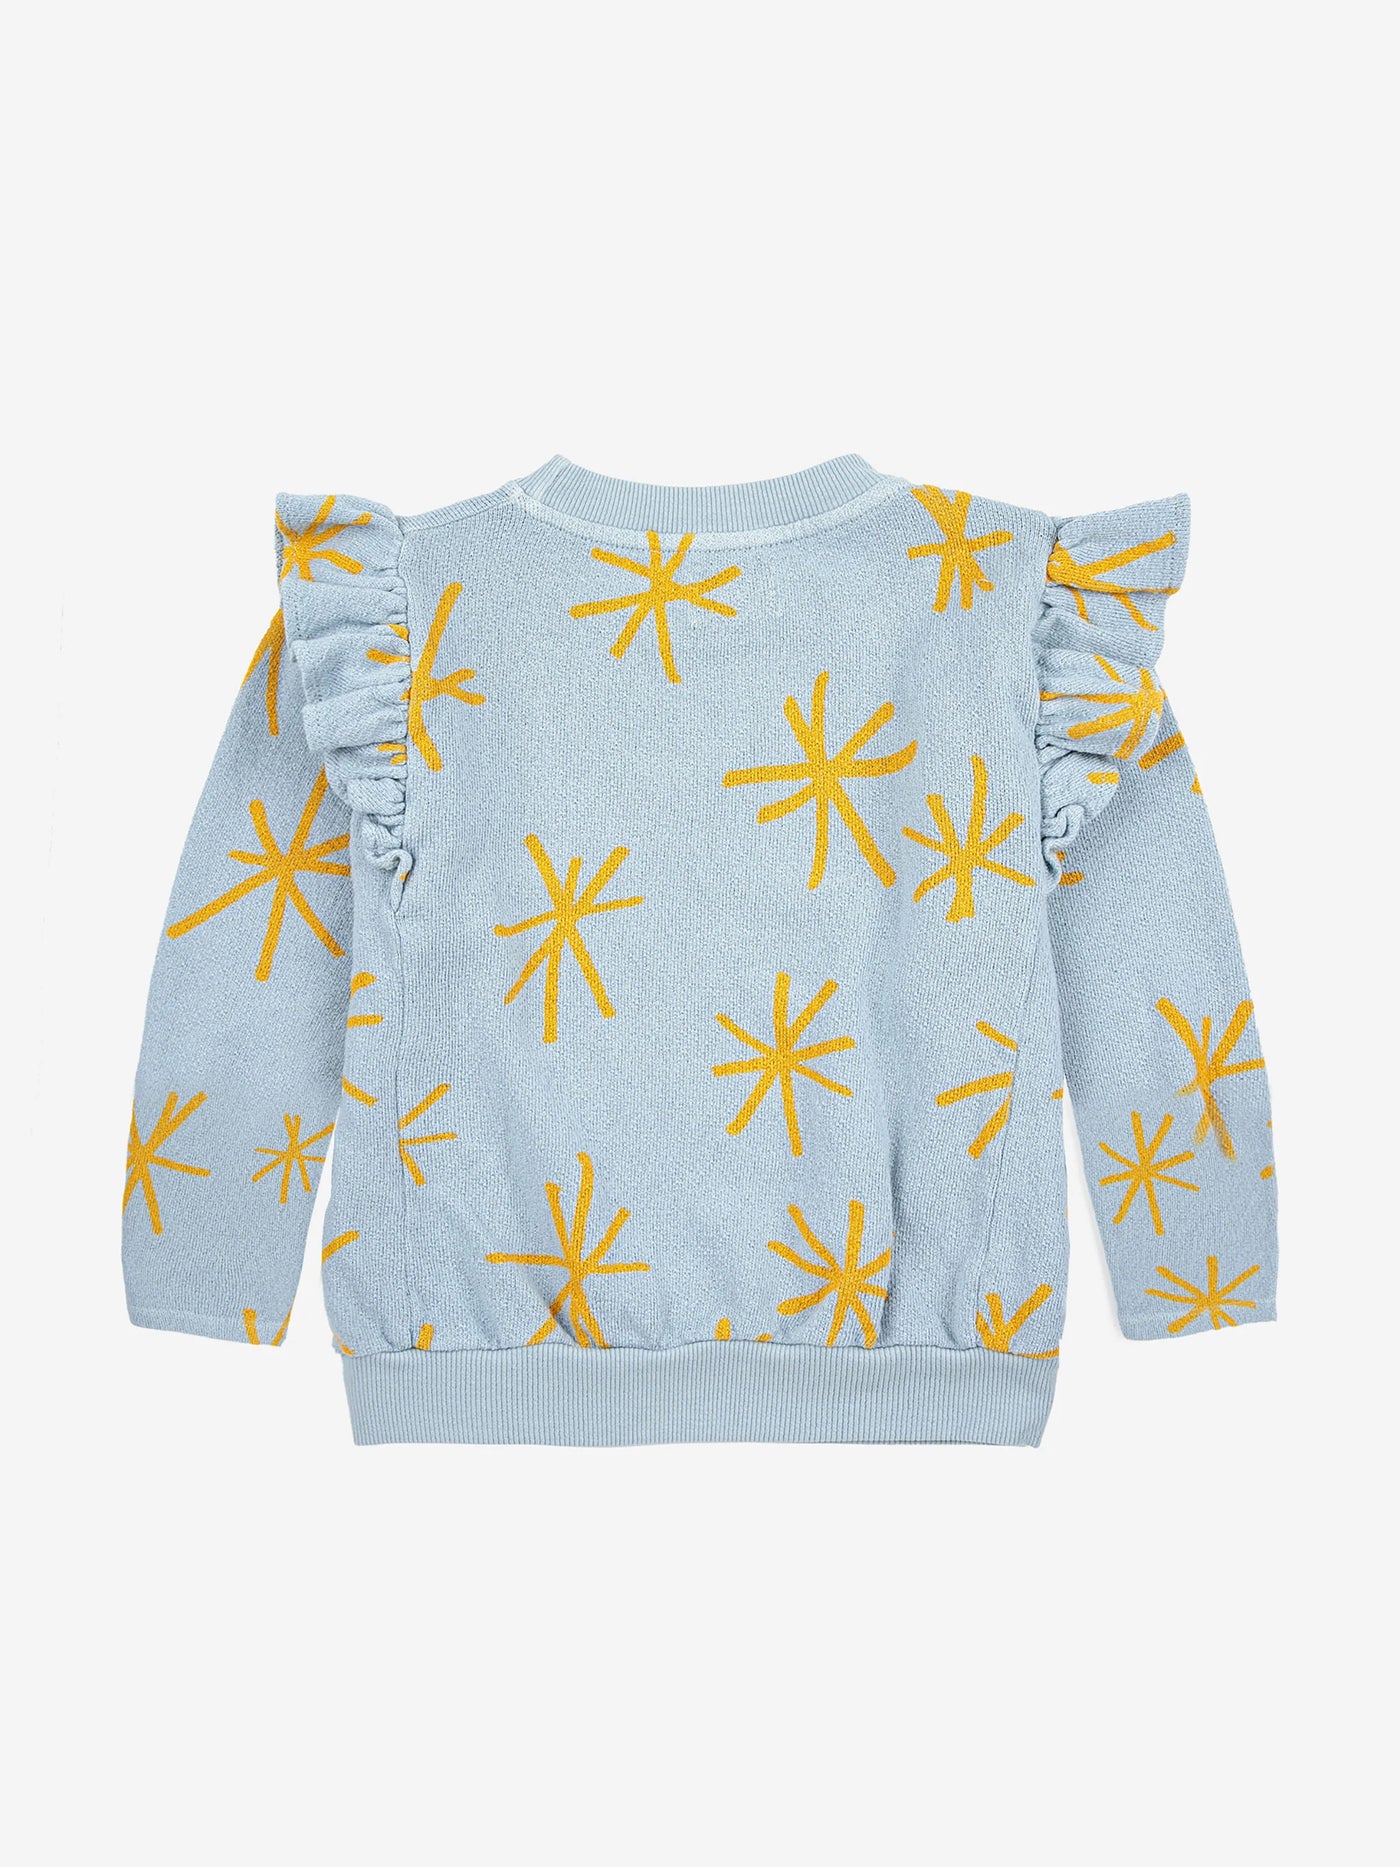 Sparkle All Over Ruffle Sweatshirt